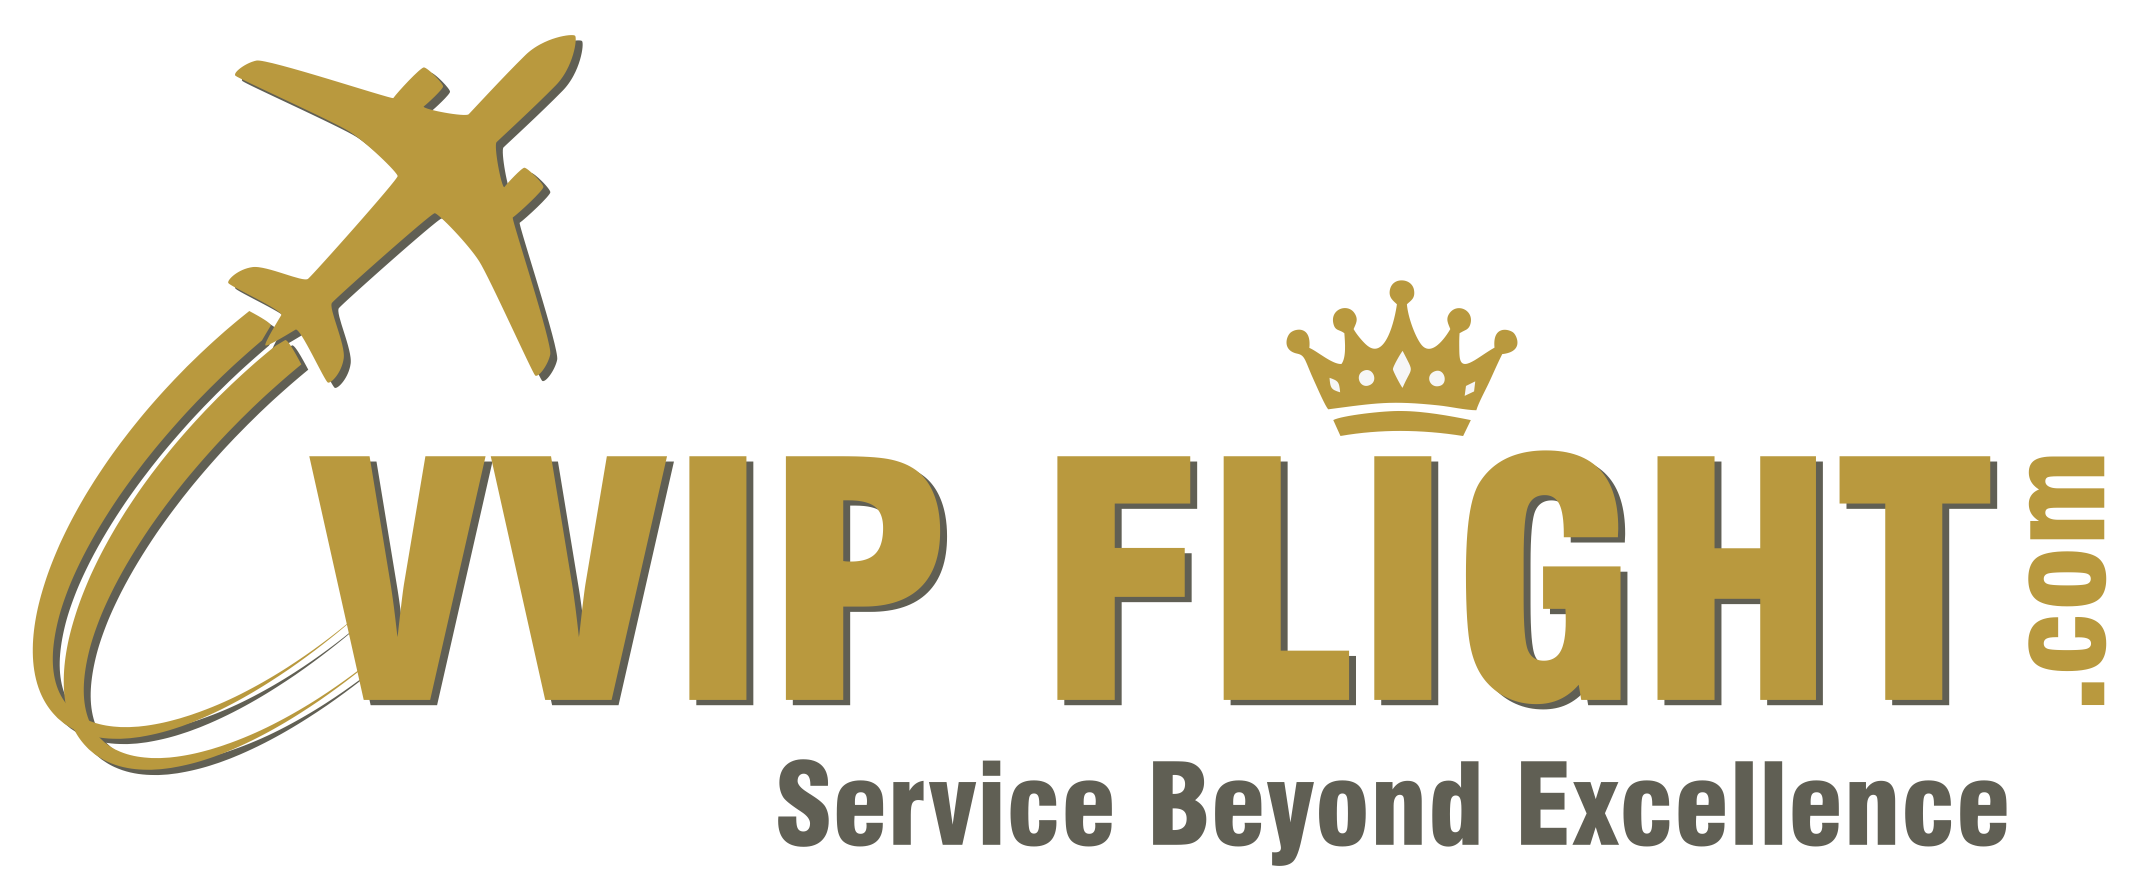 VVIP Flight|IT Services|Professional Services